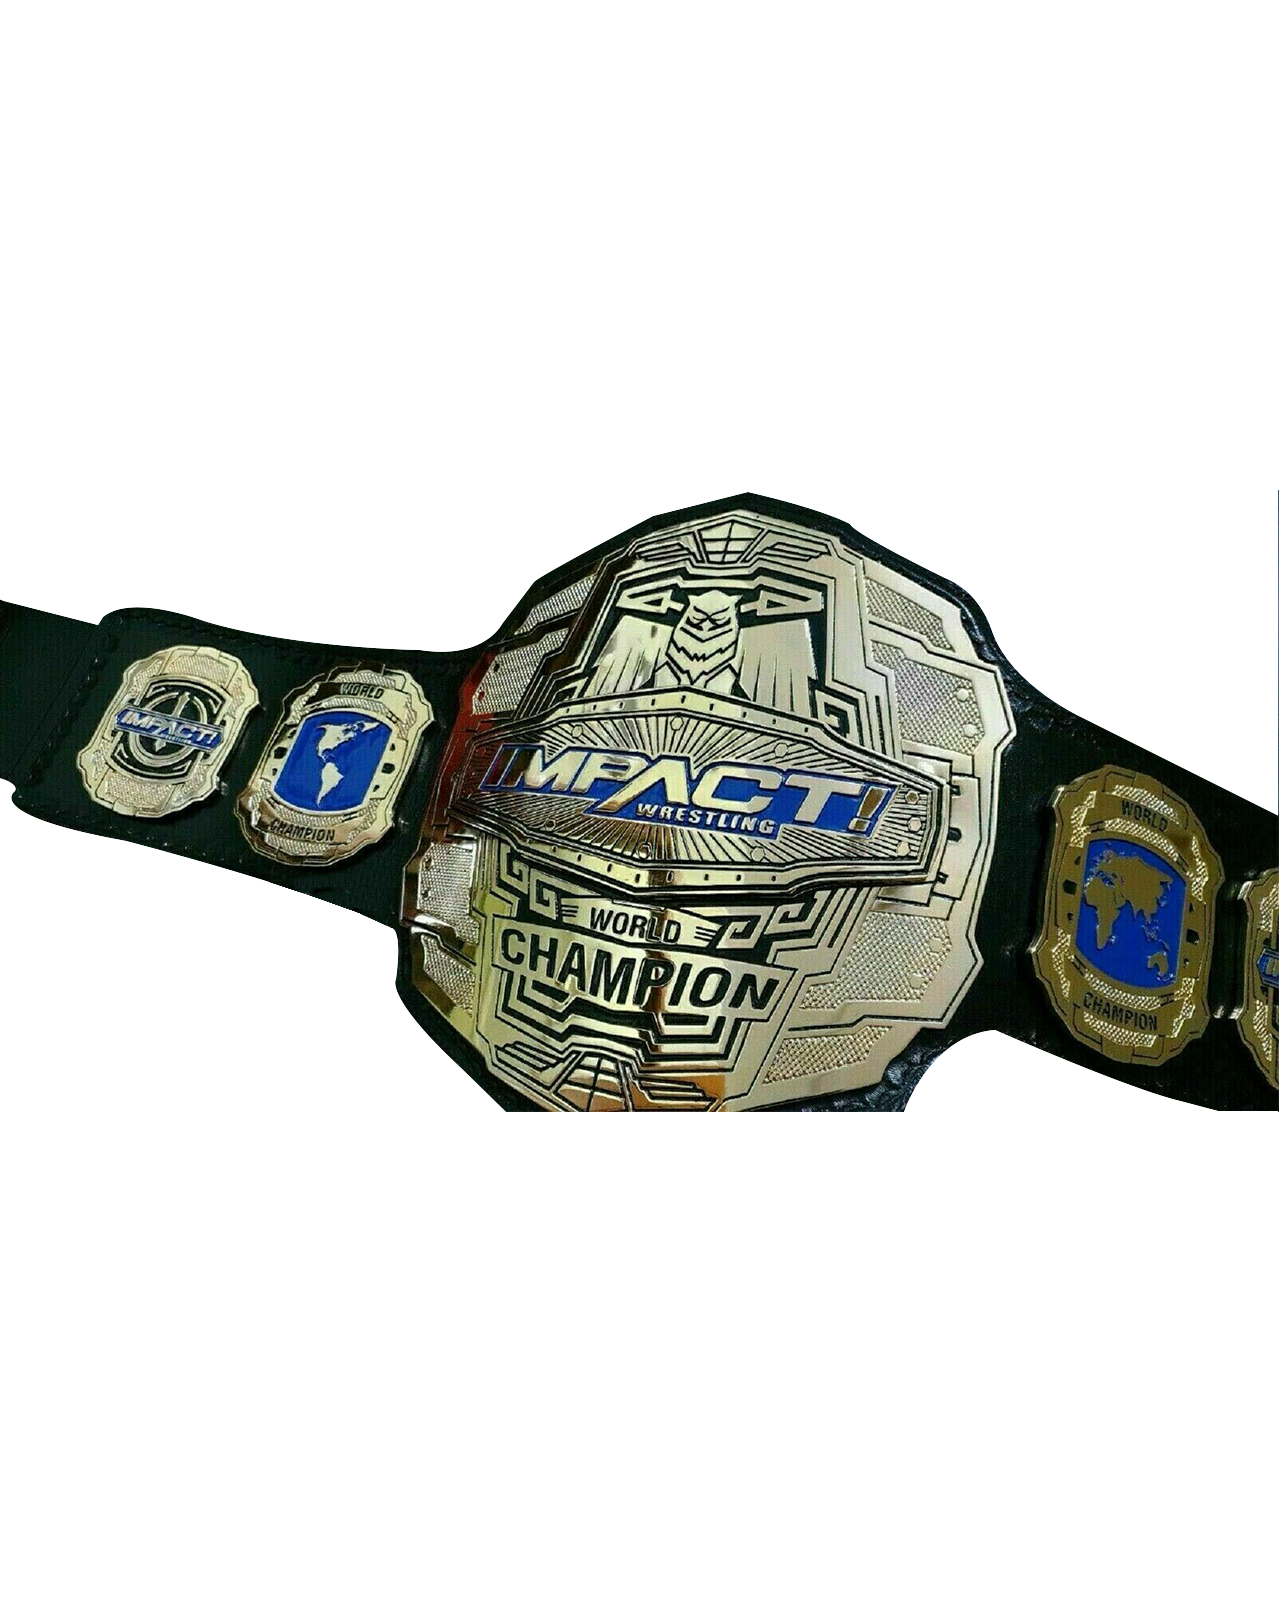 New Impact World Wrestling Championship Wrestling Belt